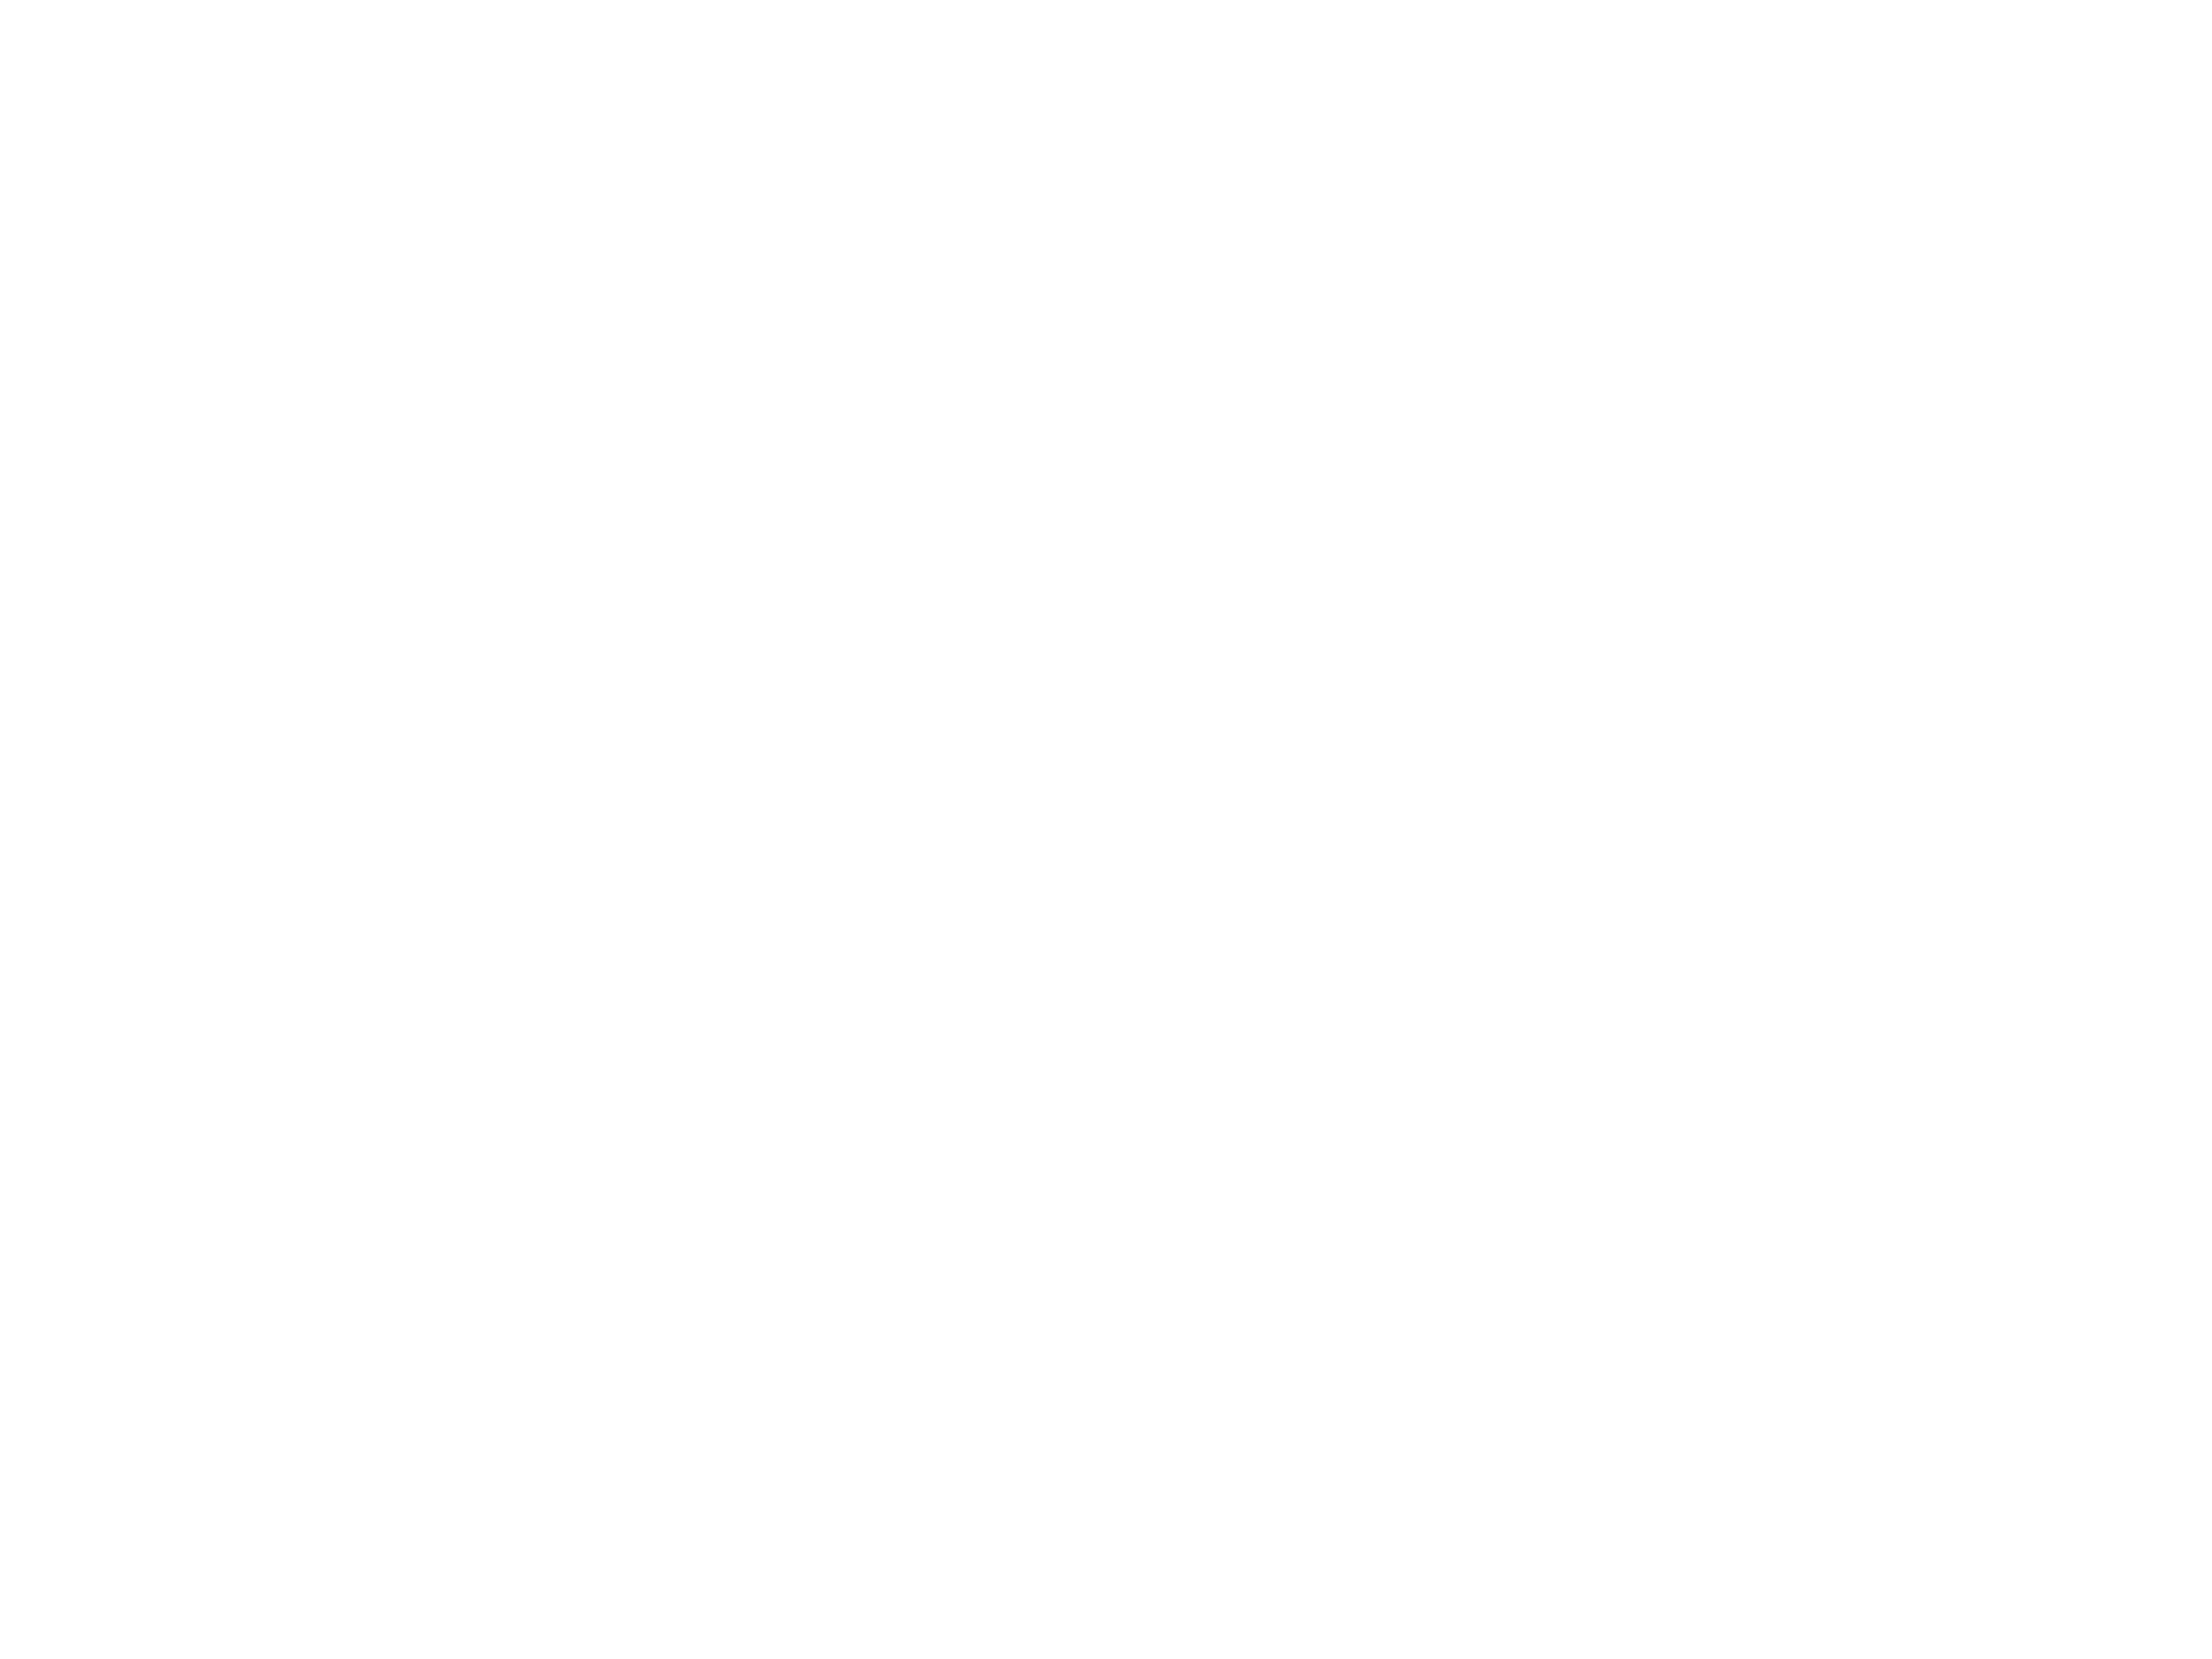 Hashtag Sports Awards logo „Best agency 2022 “, white lettering on black background